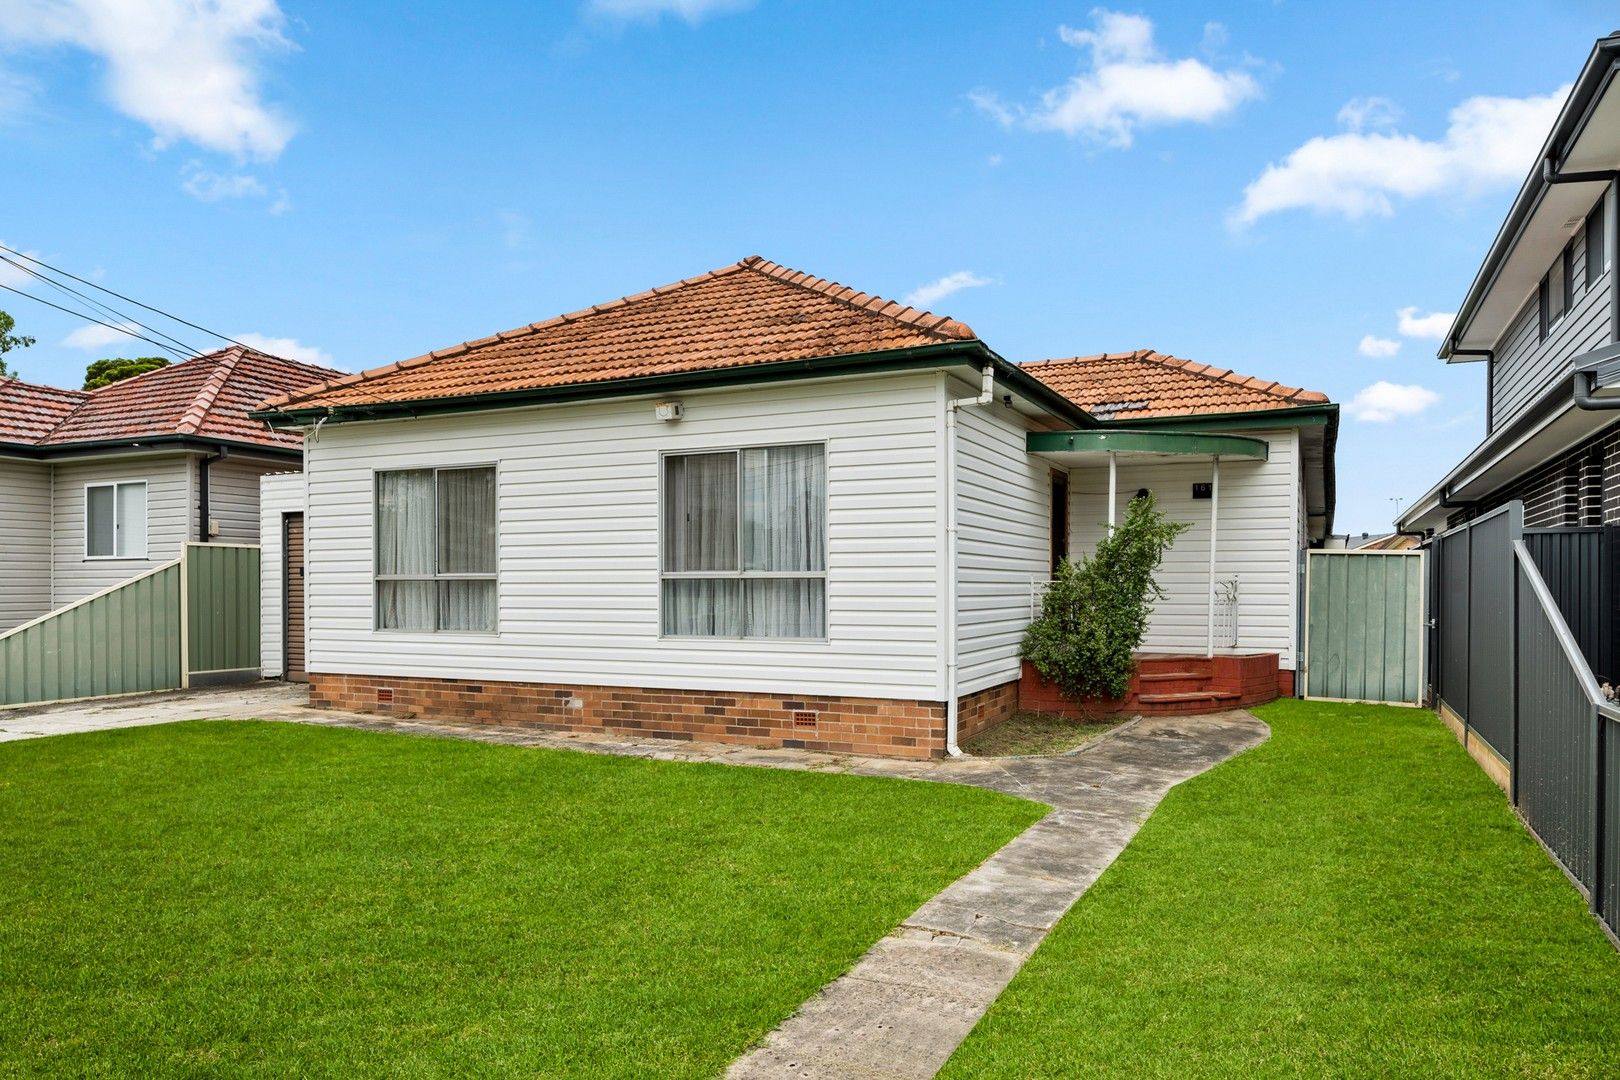 3 bedrooms House in 161 Birdwood Road GEORGES HALL NSW, 2198